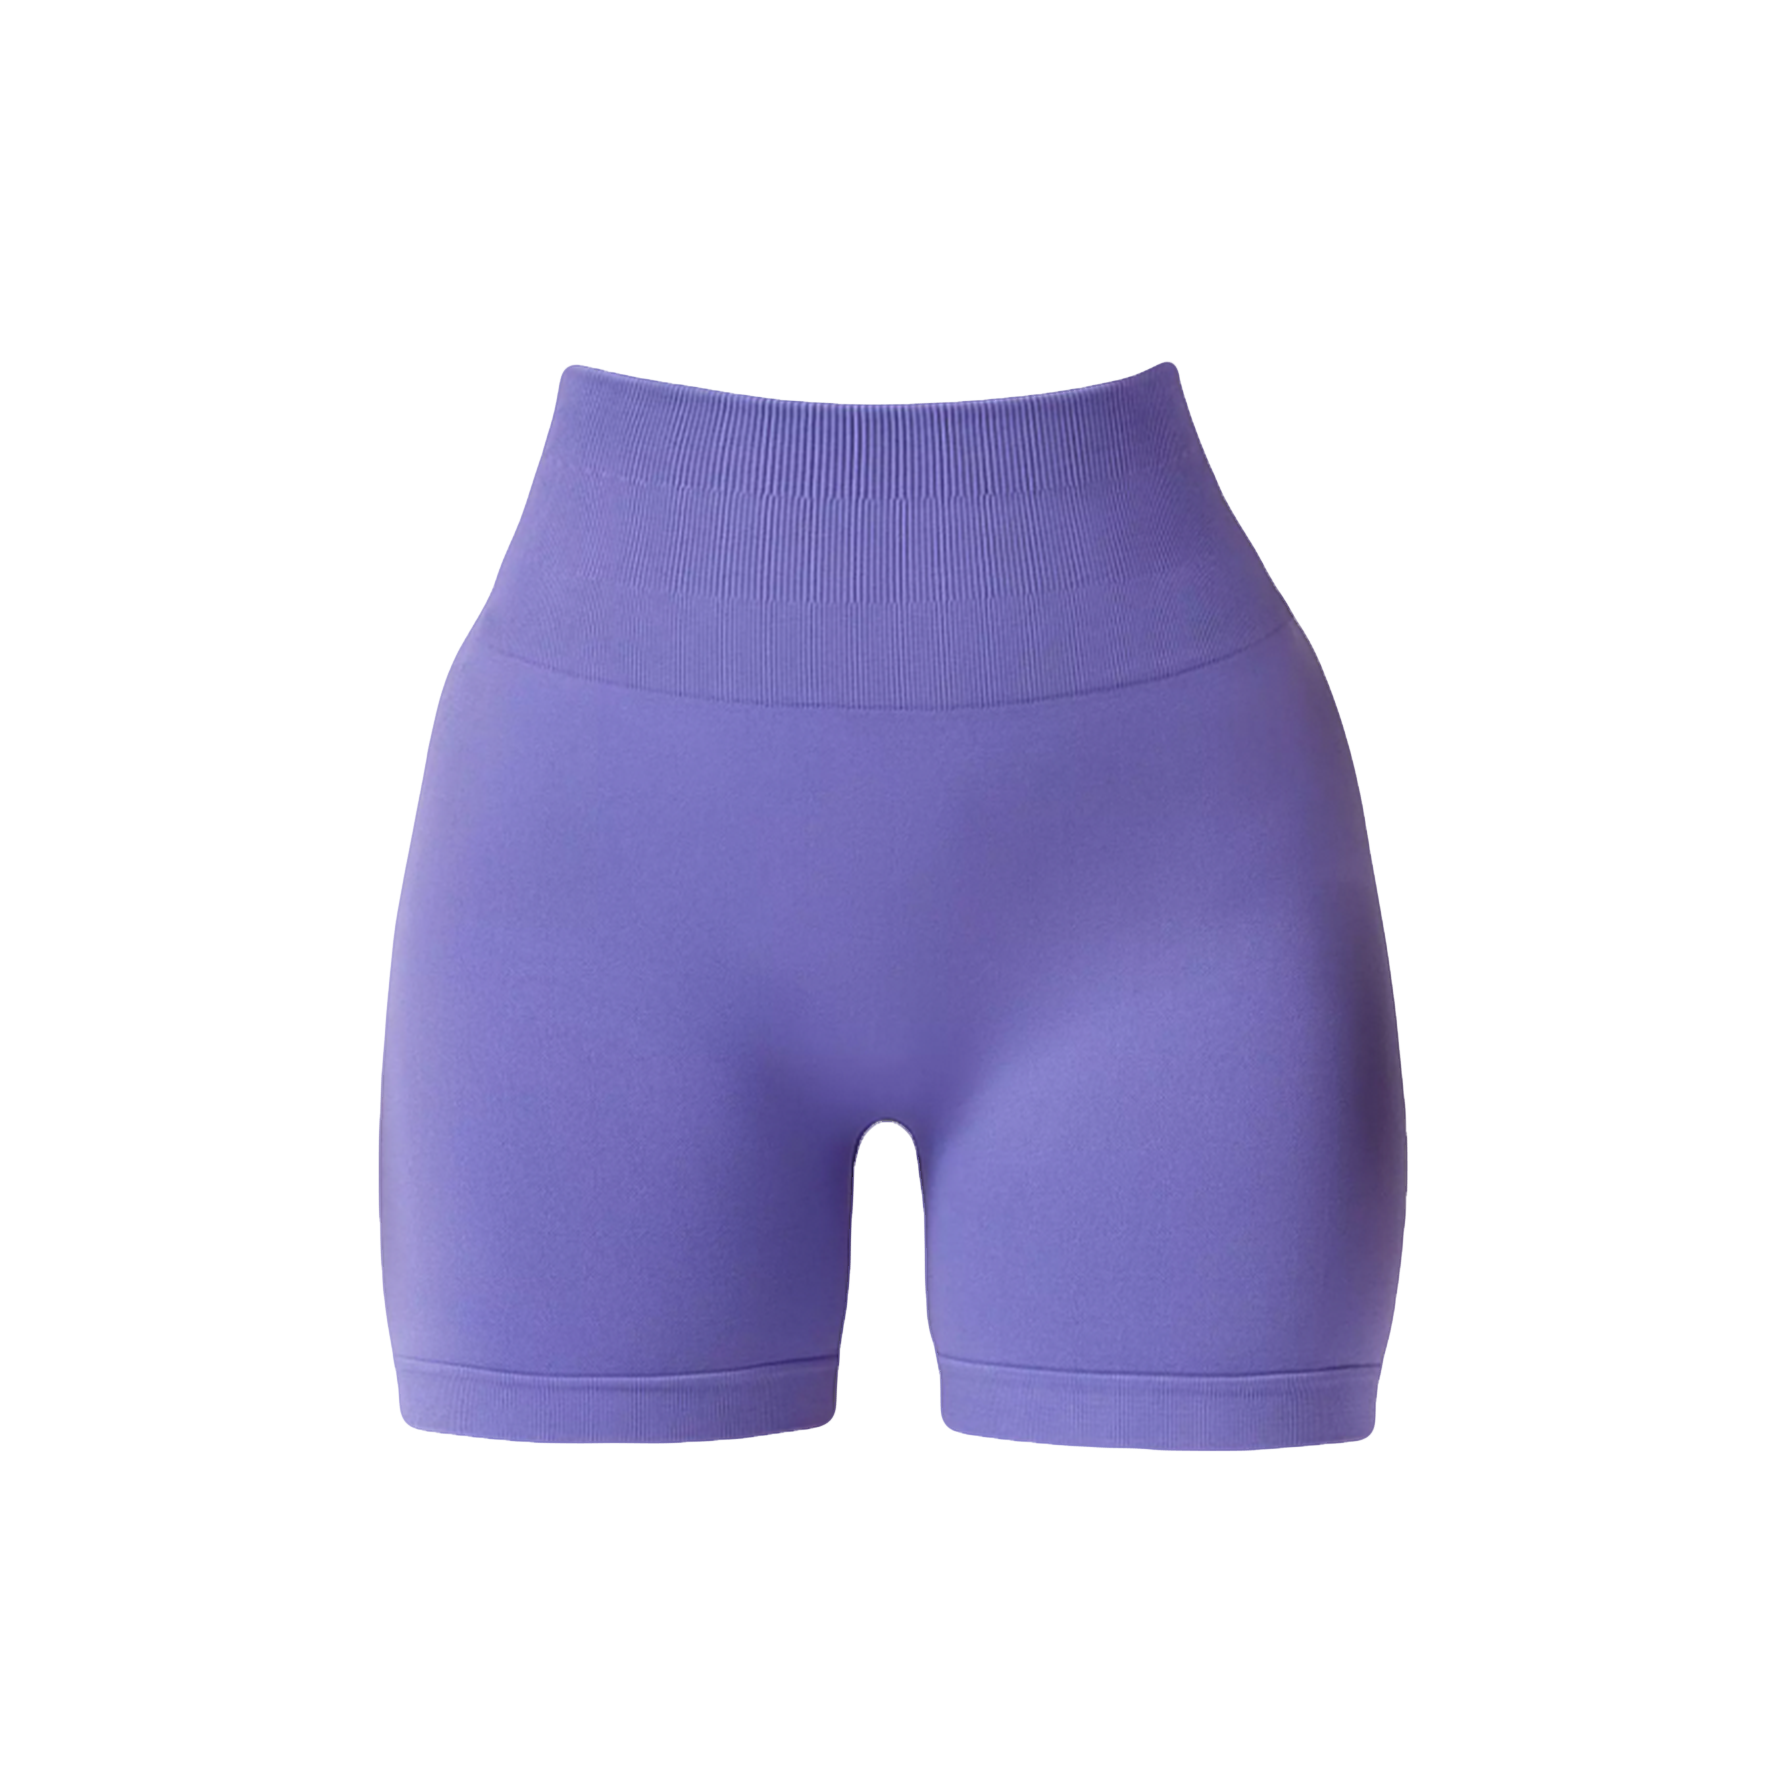 Sculpt scrunch shorts: purple